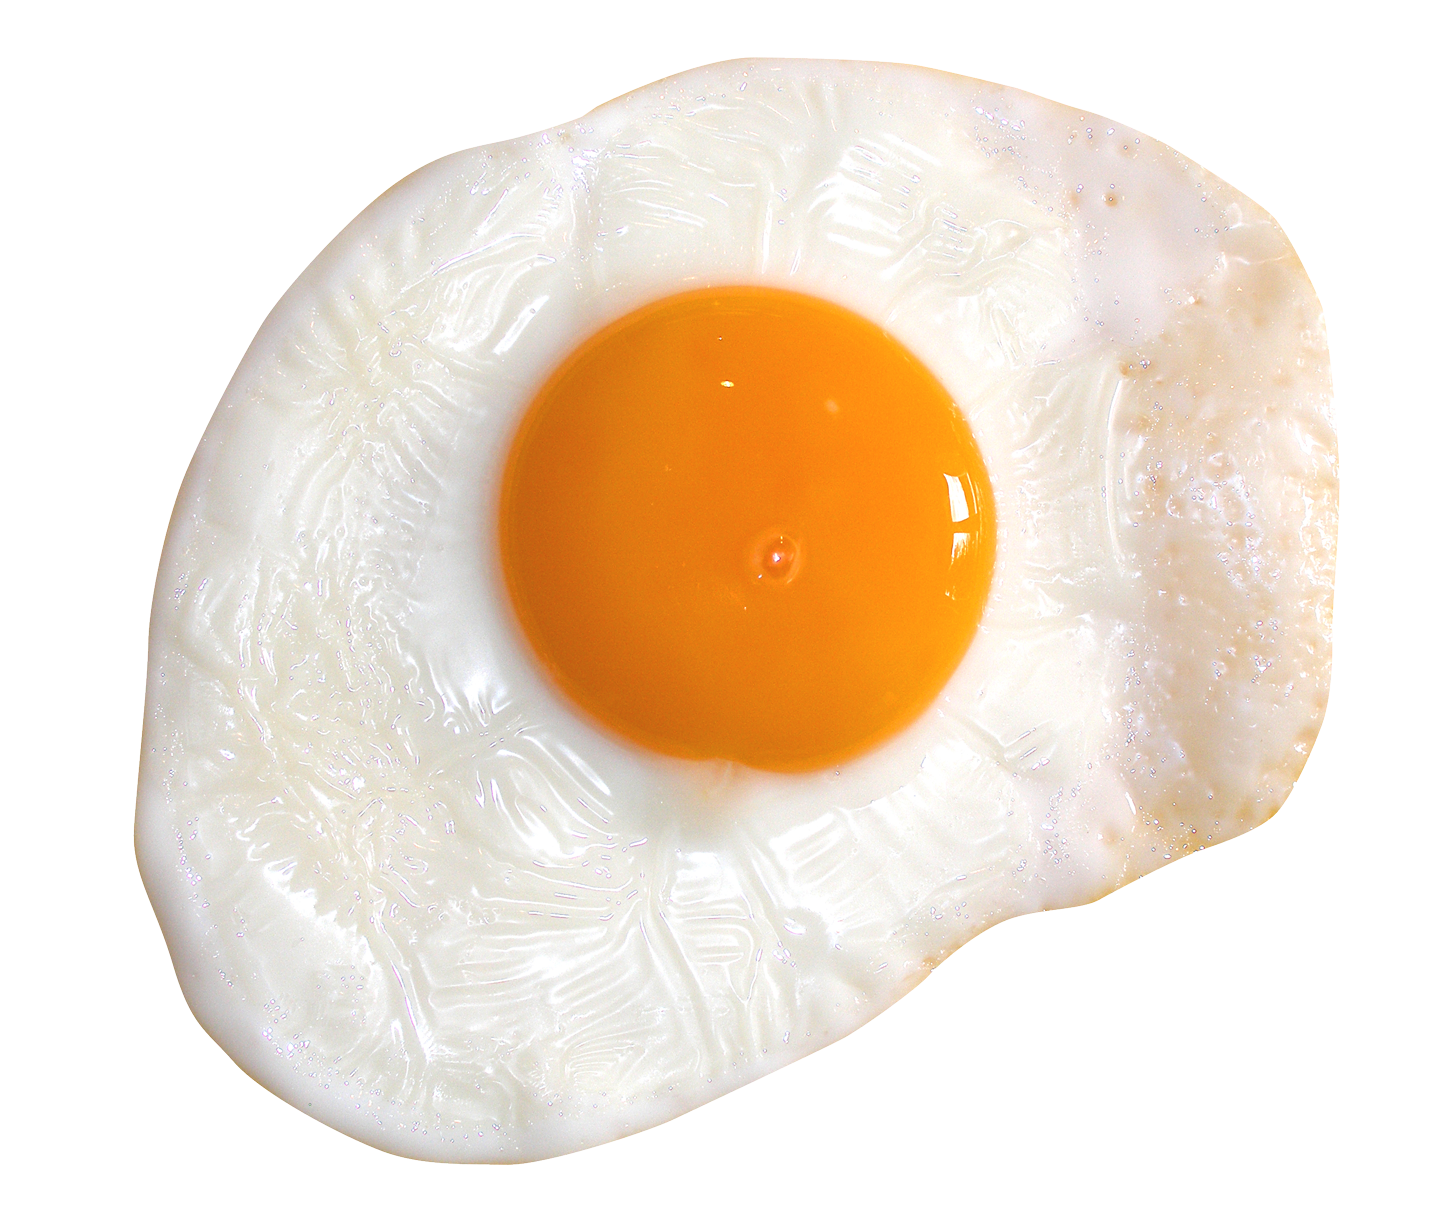 Fried Egg PNG File Download Free